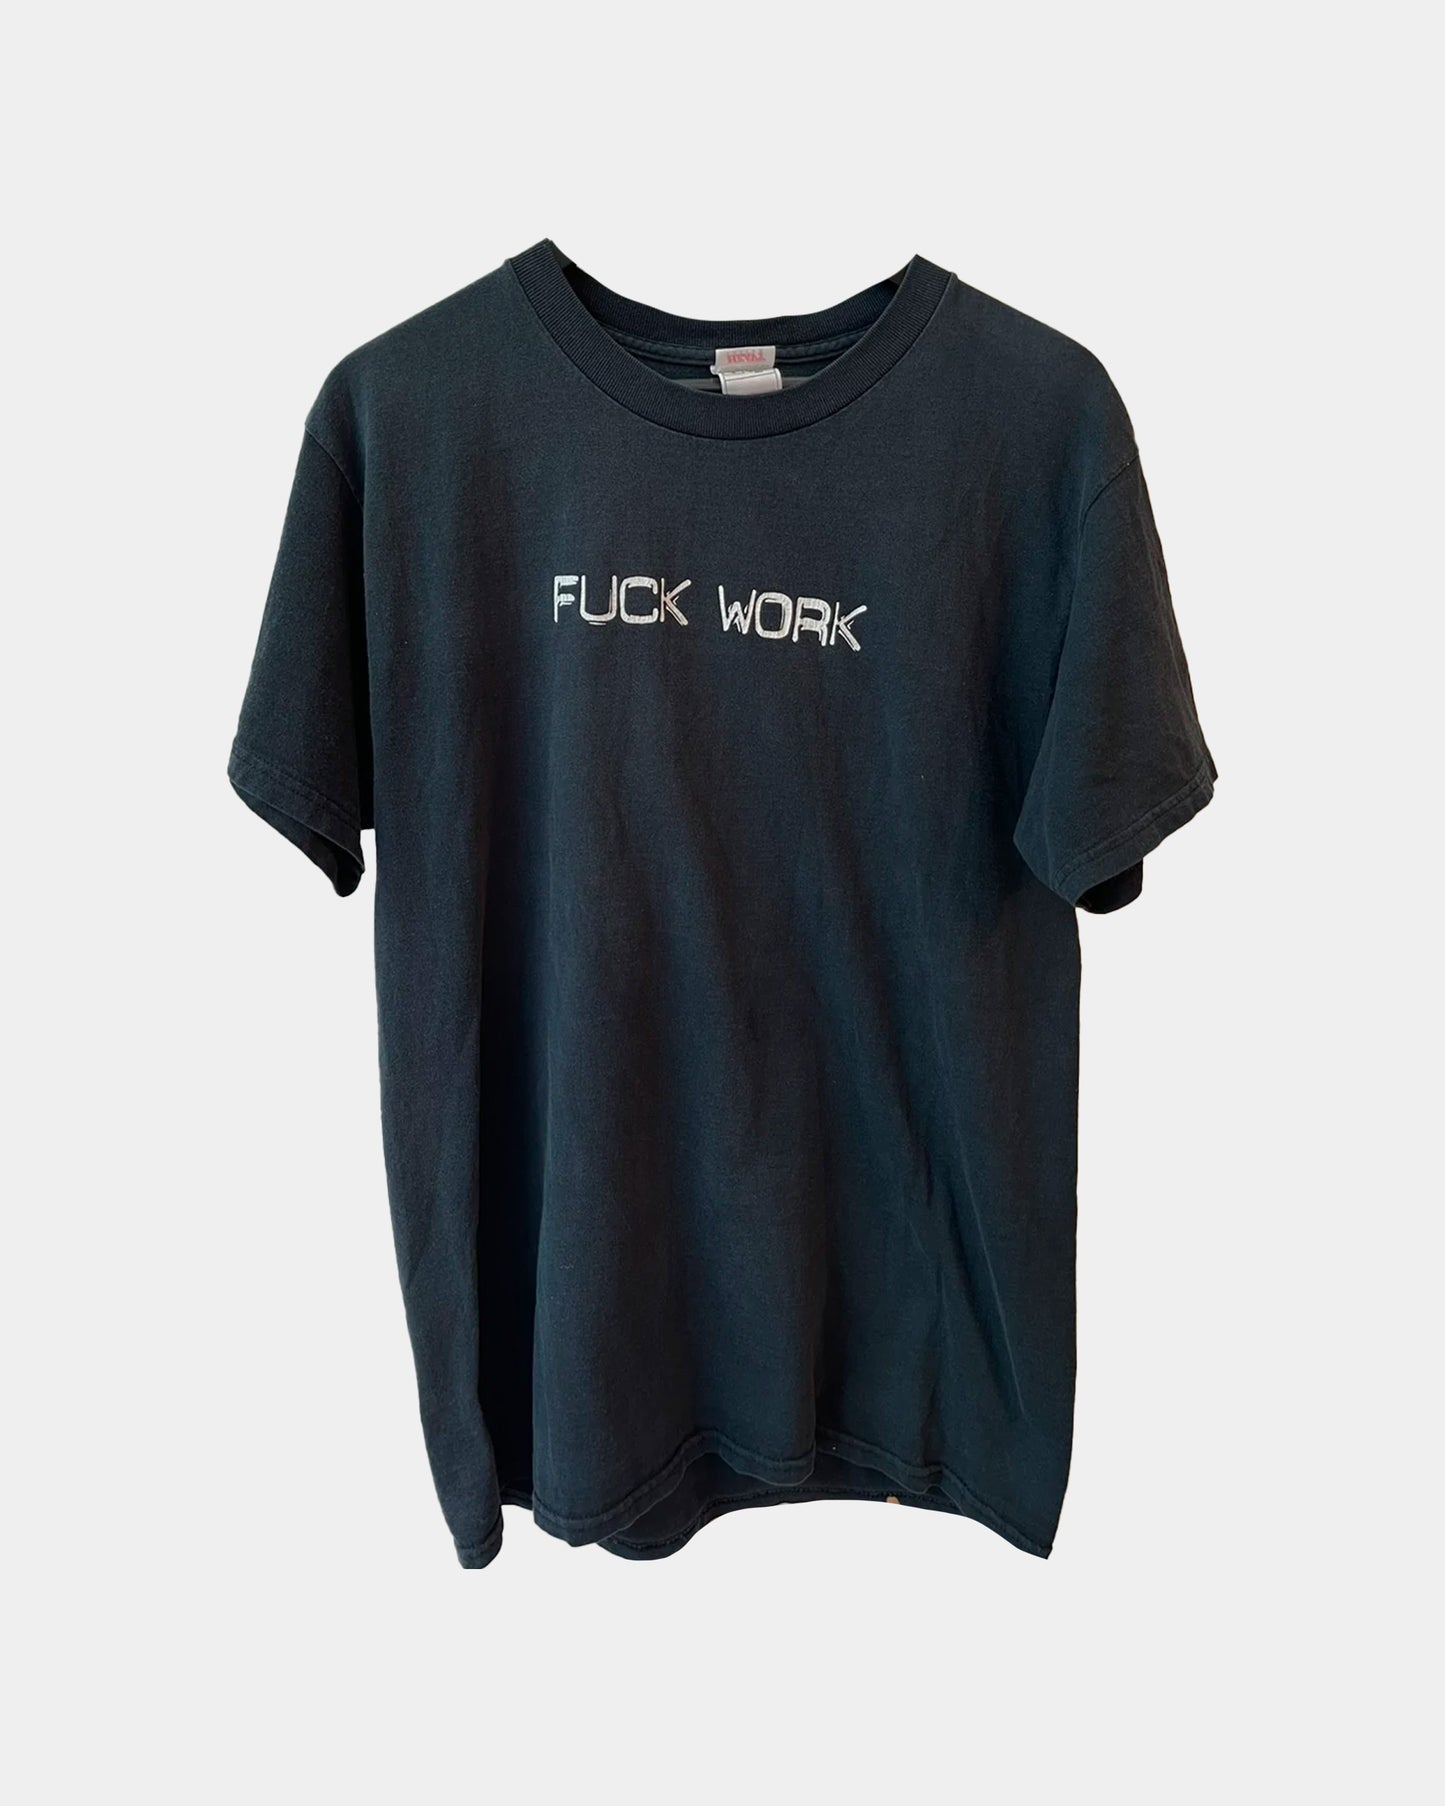 Vintage FUCK WORK Shirt 4Gseller